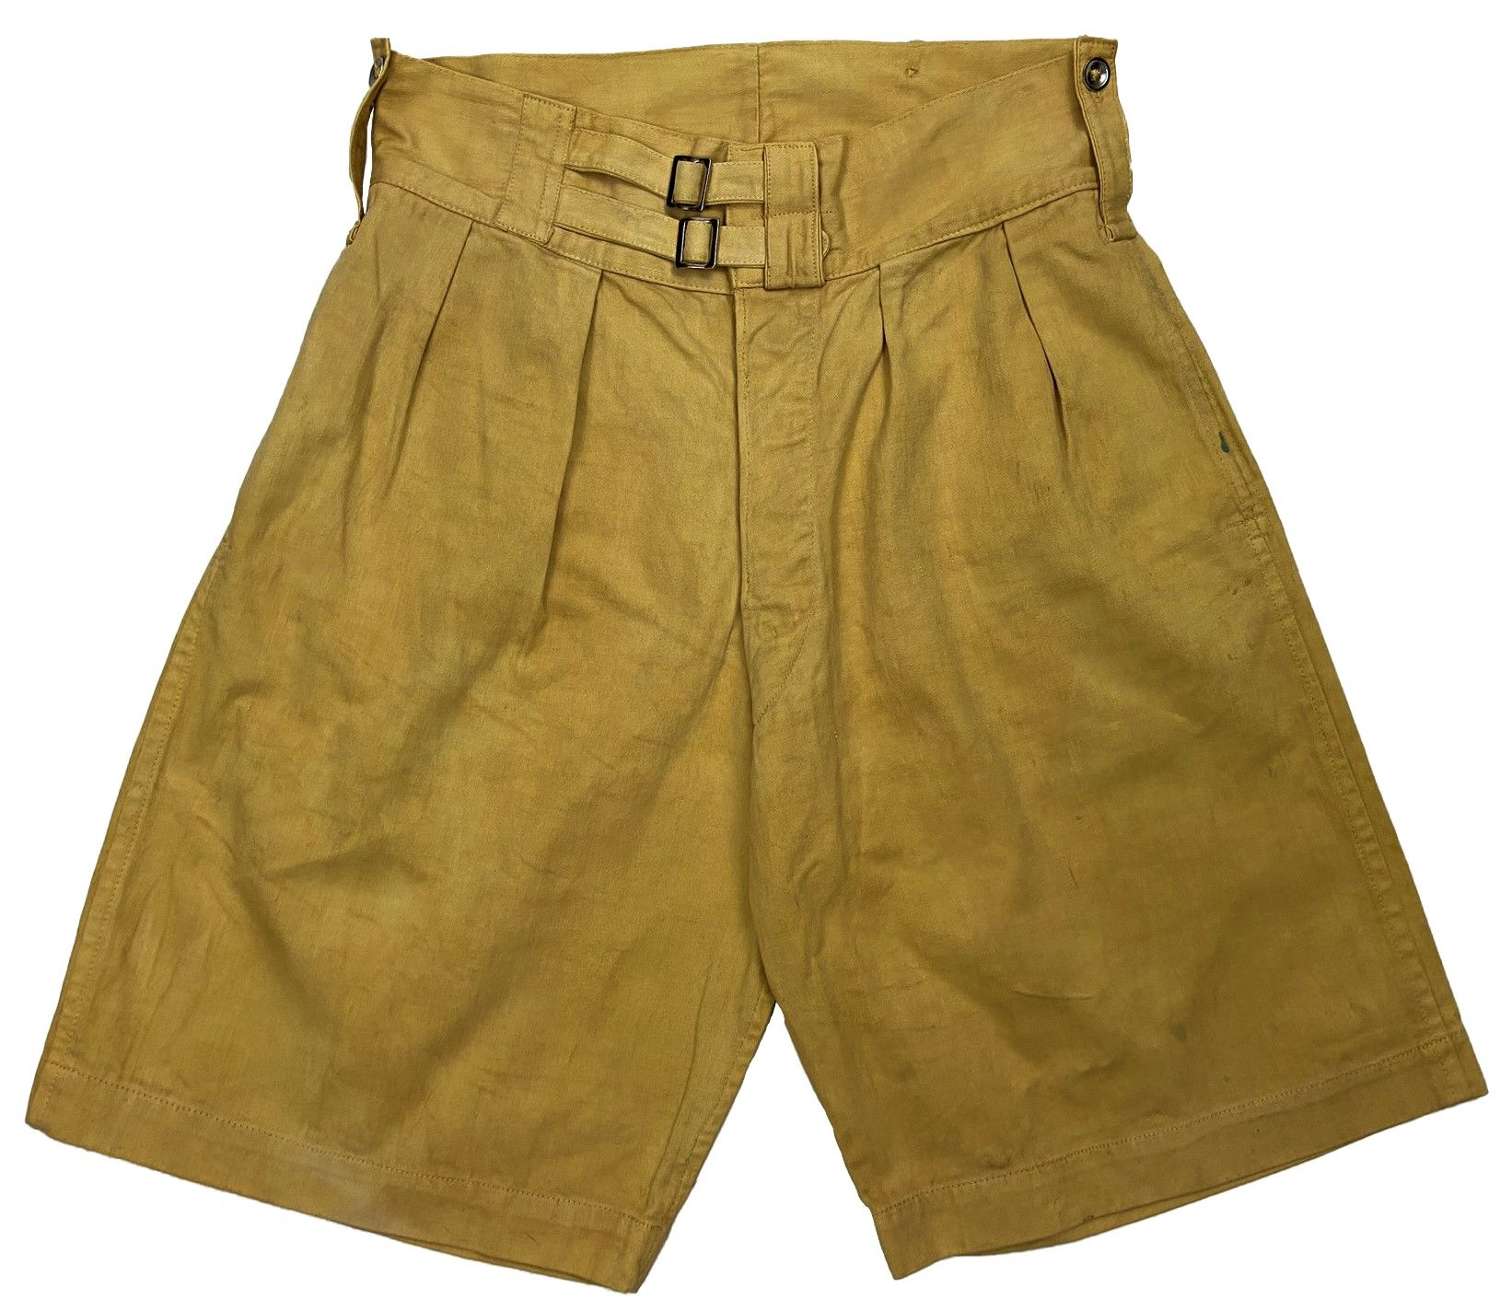 Original 1940s Cotton Drill Shorts